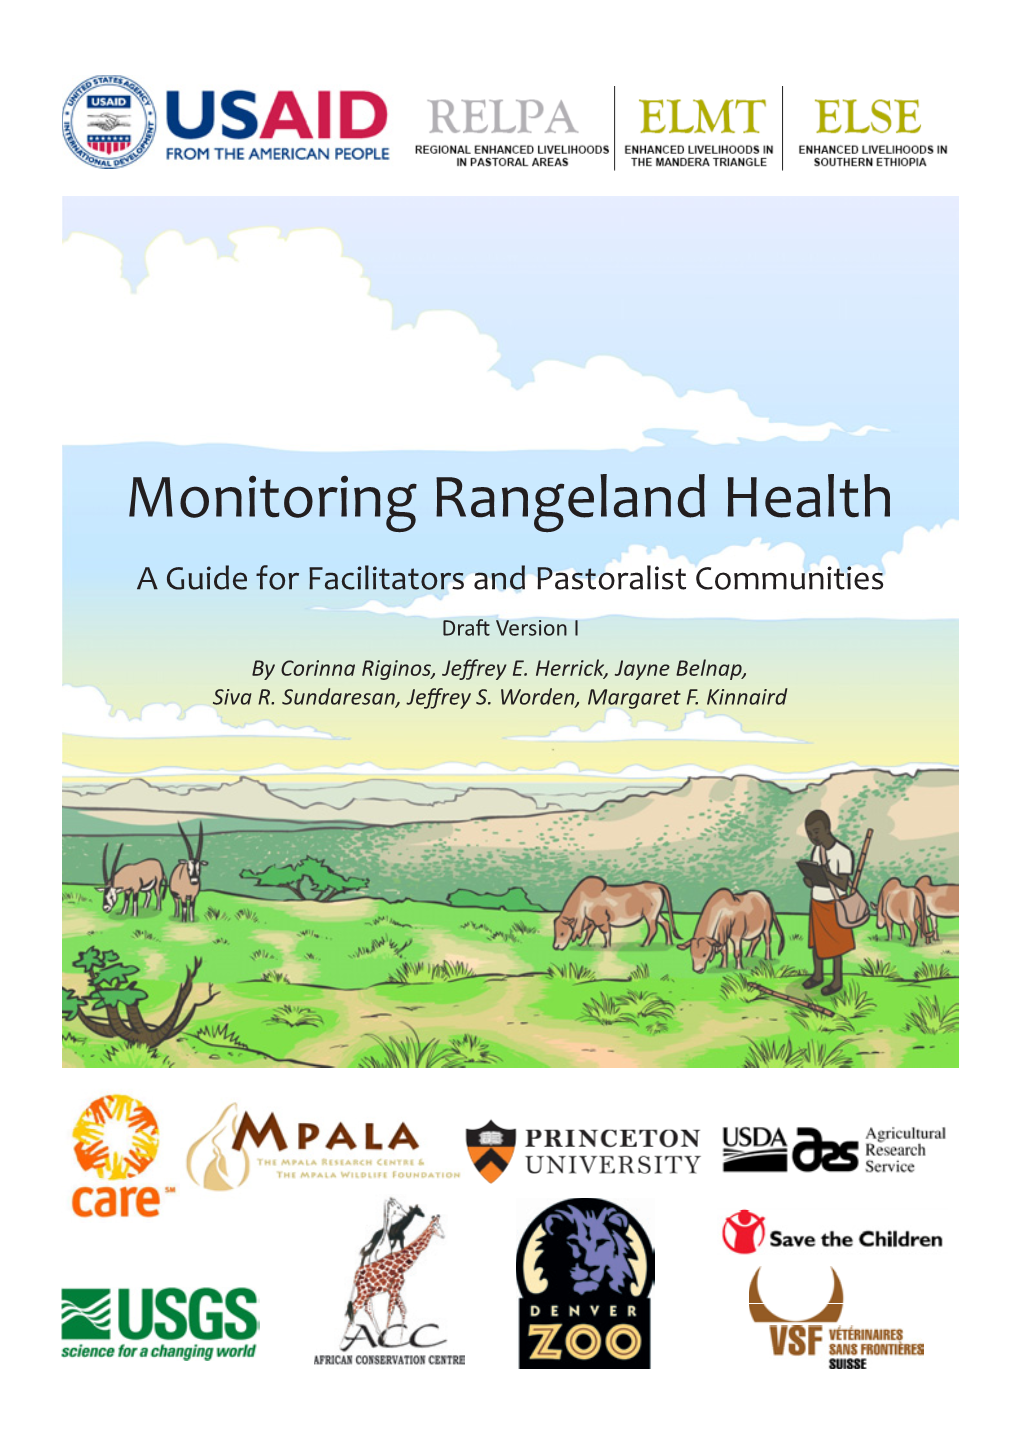 Monitoring Rangeland Health a Guide for Facilitators and Pastoralist Communities Draft Version I by Corinna Riginos, Jeffrey E